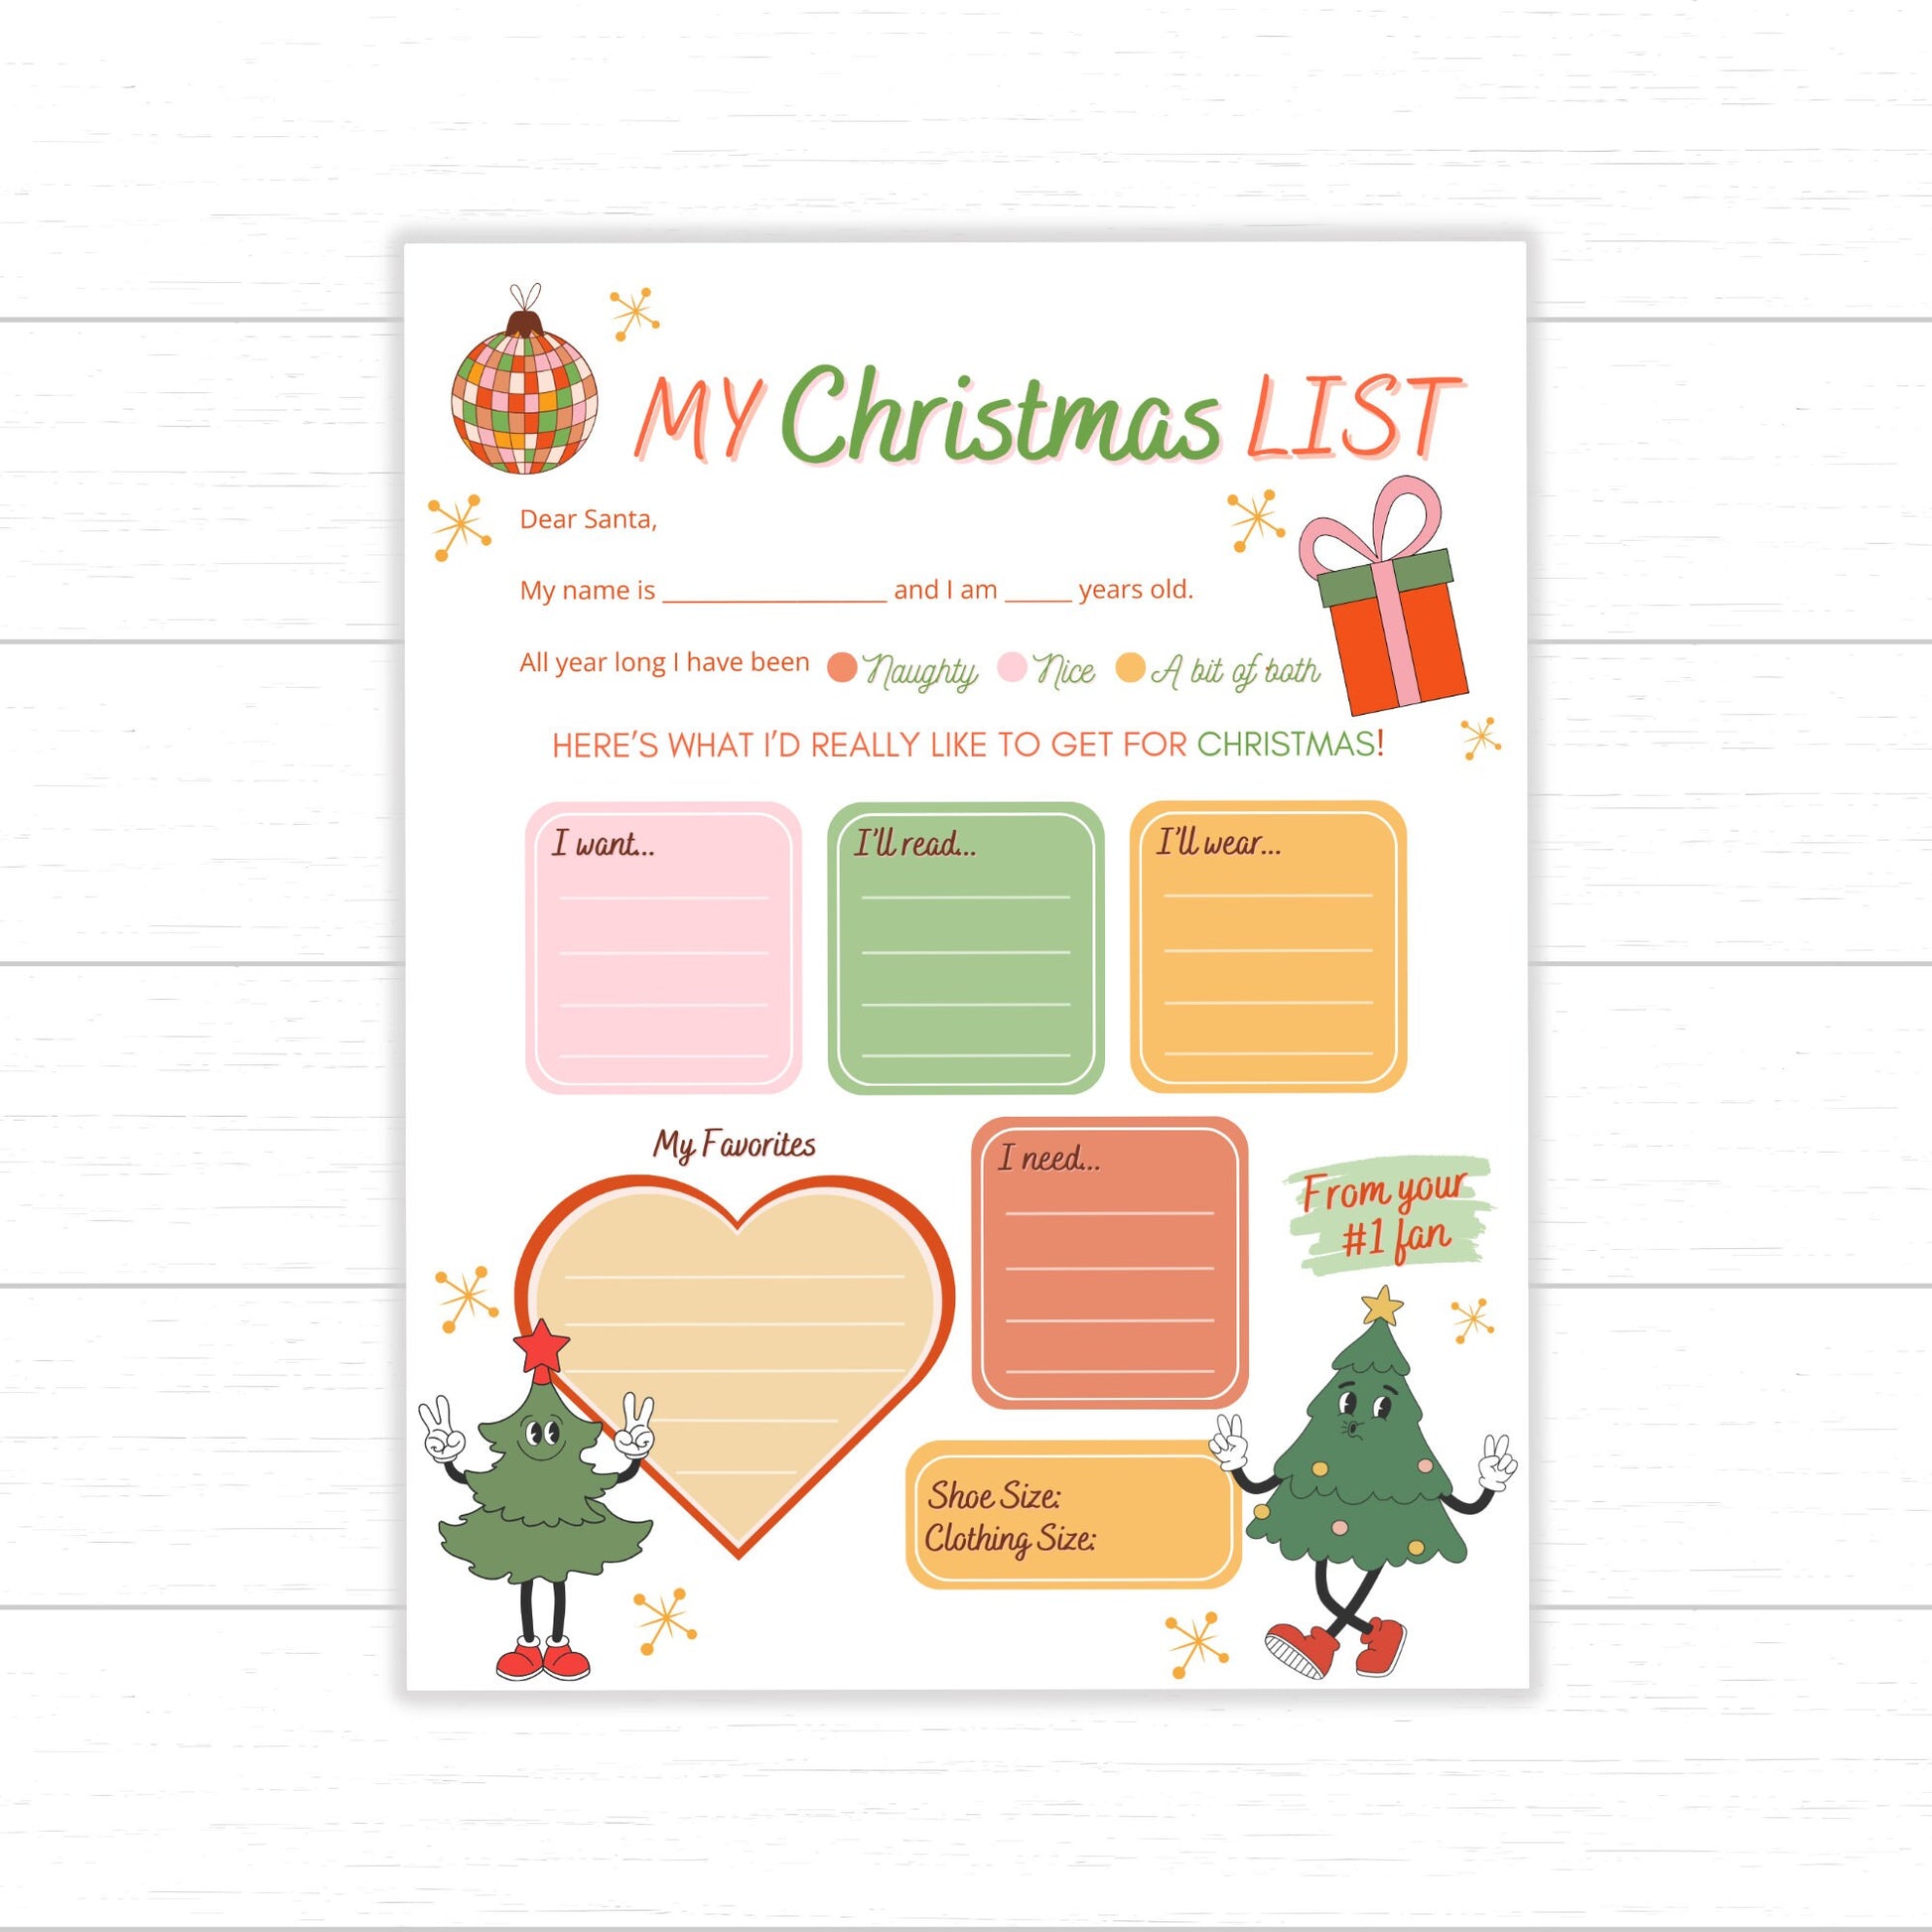 Retro Christmas Wish List to Santa, Christmas Wish List, Vintage Wish List for Kids, Printable Christmas List, Wish List from Kids to Santa